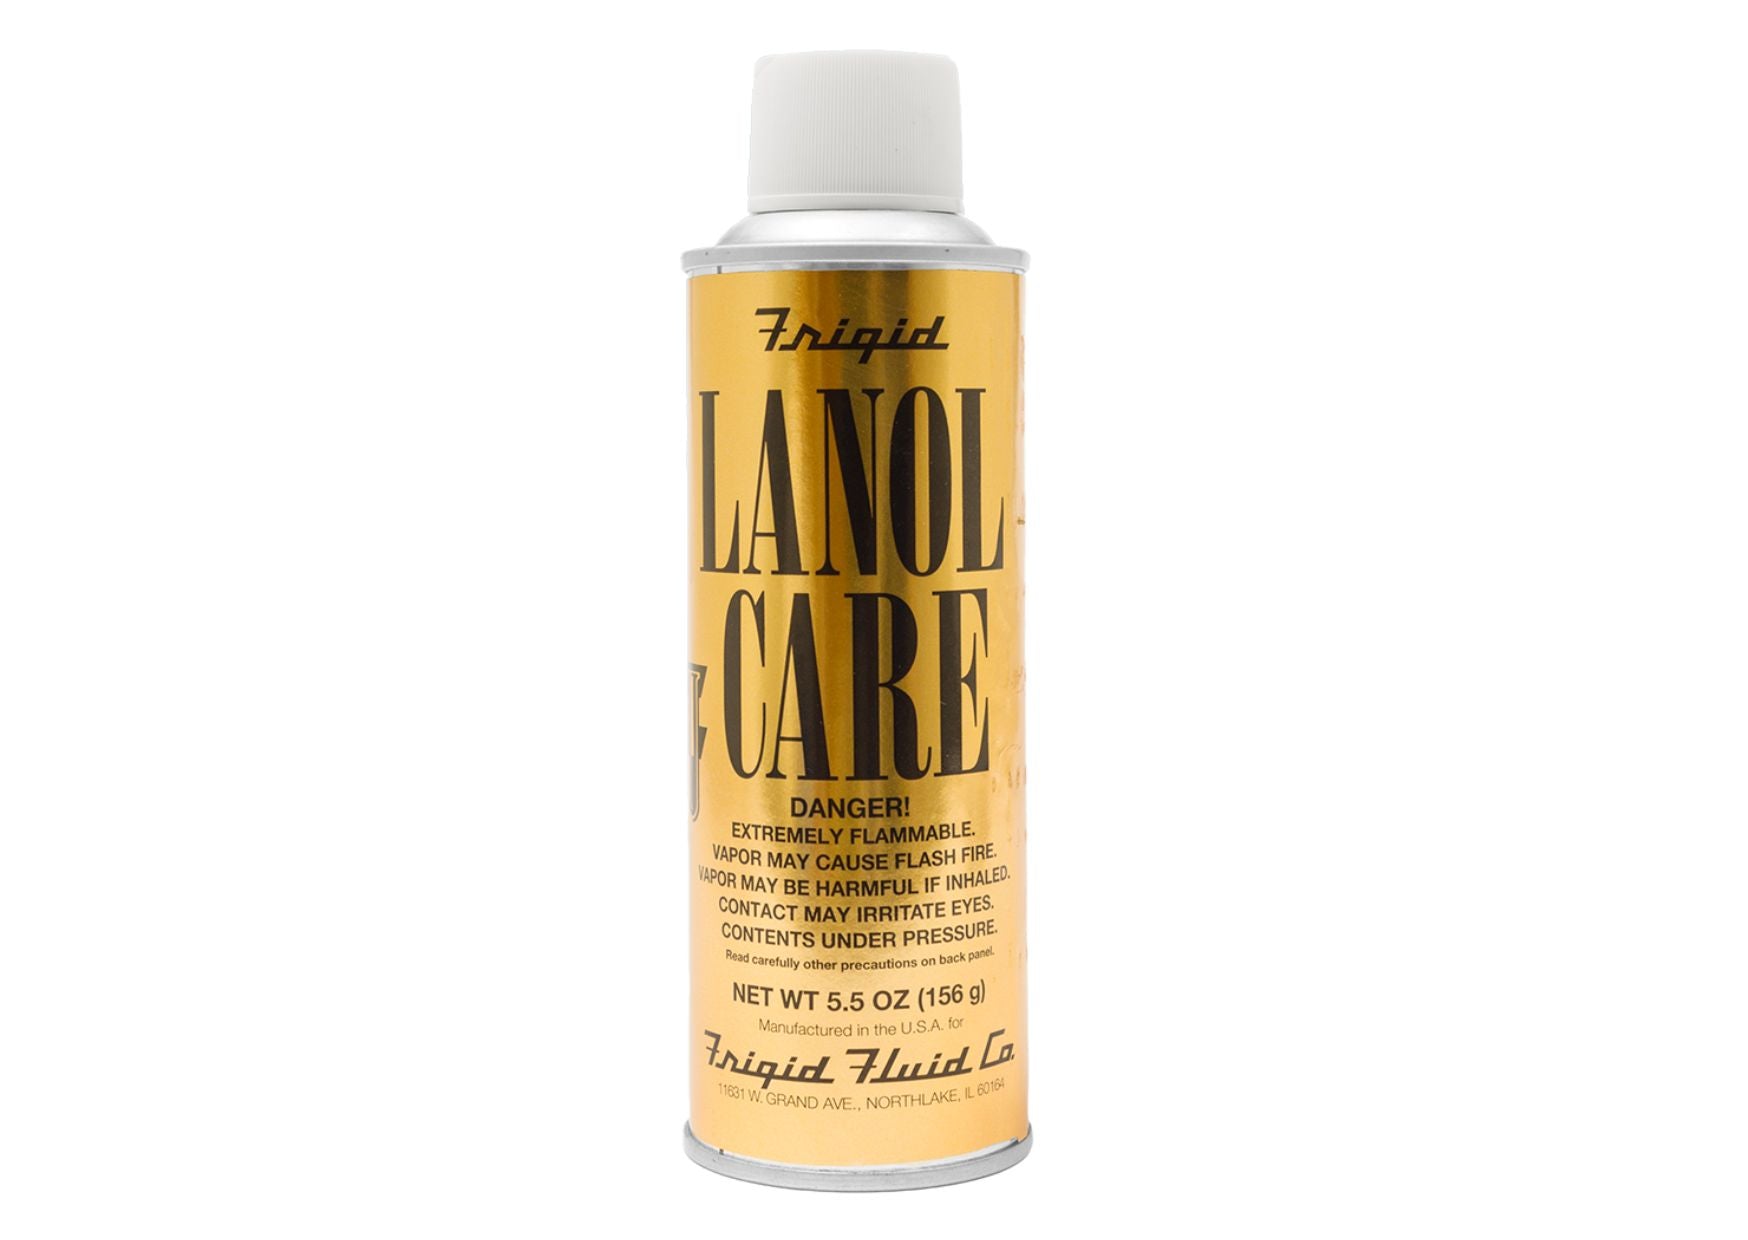 Frigid Lanol Care Spray